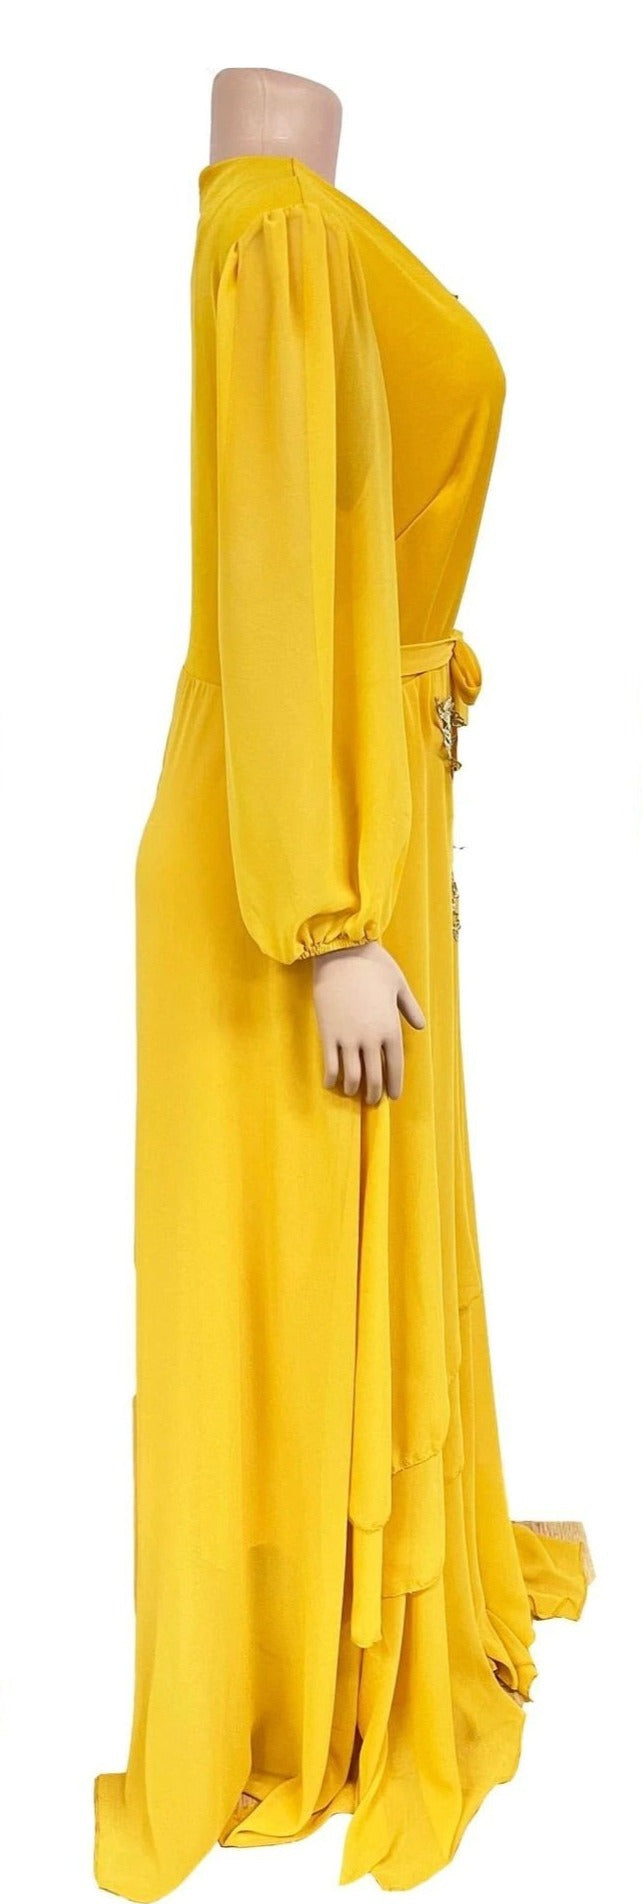 Djellaba Femme jaune